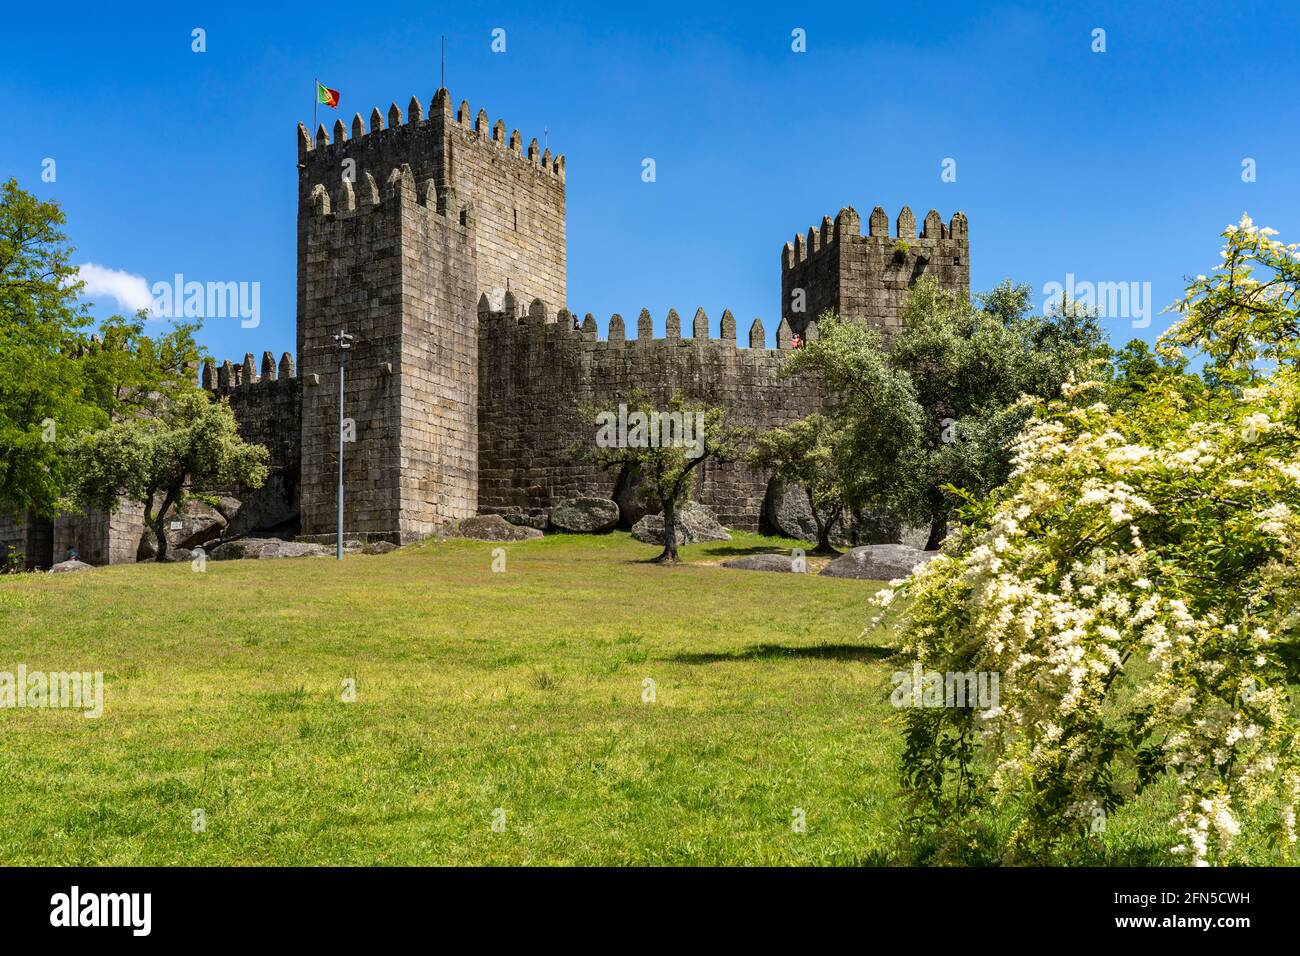 Die alte romanische Burg von Guimaraes, Portugal, Europa | forteresse médiévale Château de Guimaraes, Guimaraes, Portugal, Europe Banque D'Images